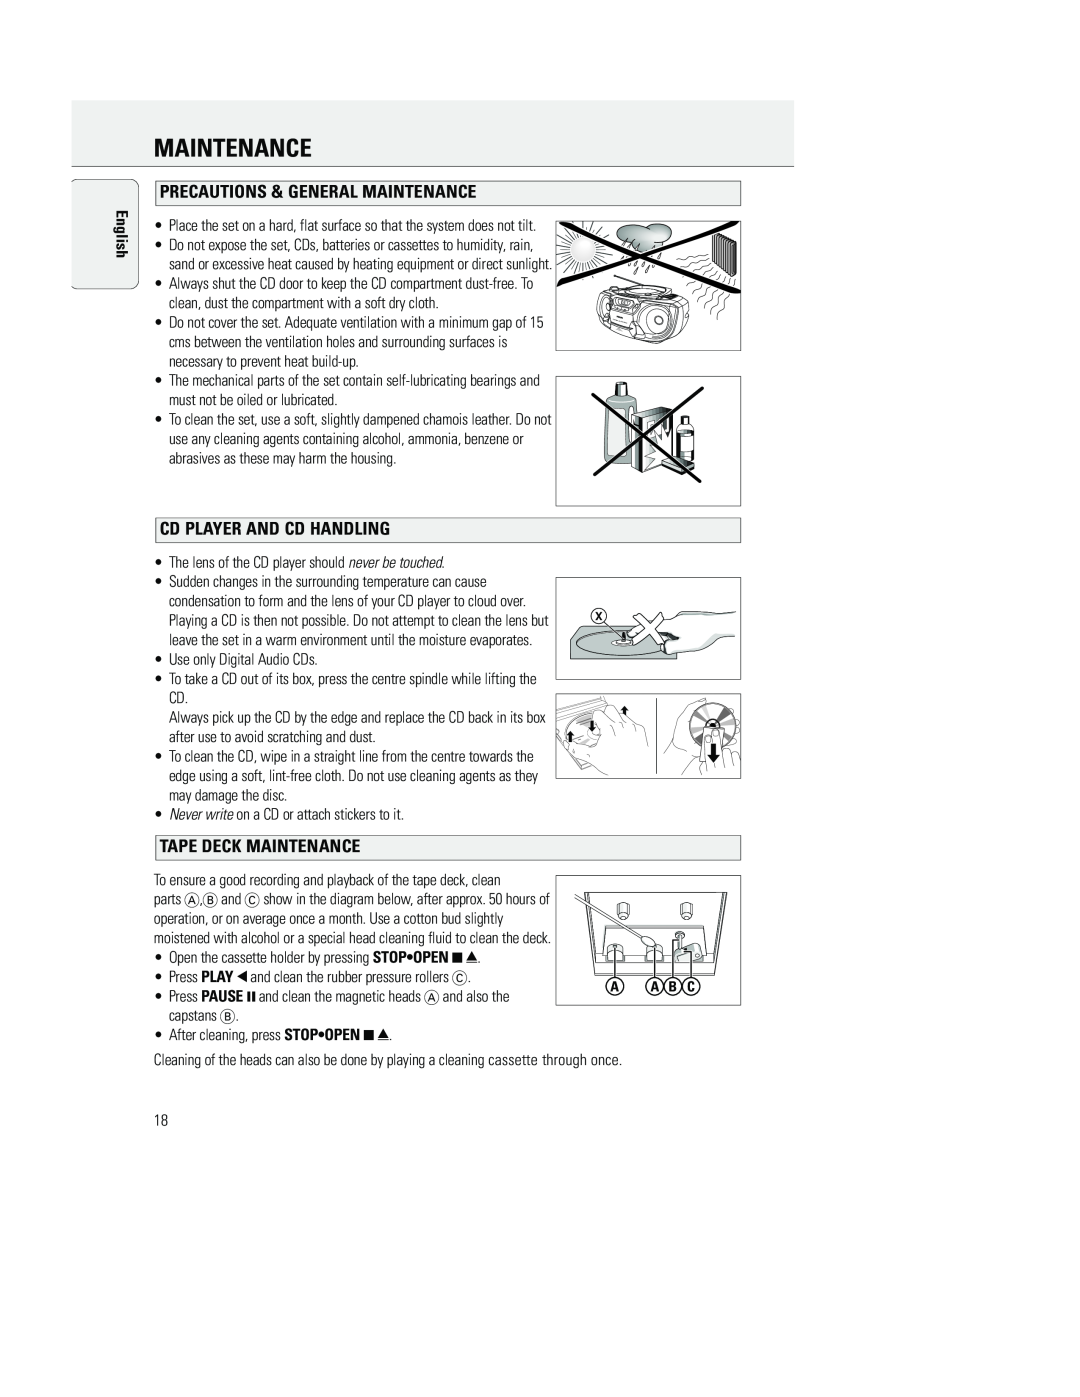 Philips AZ5150 manual Precautions & General Maintenance, Cd Player And Cd Handling, Tape Deck Maintenance, English 